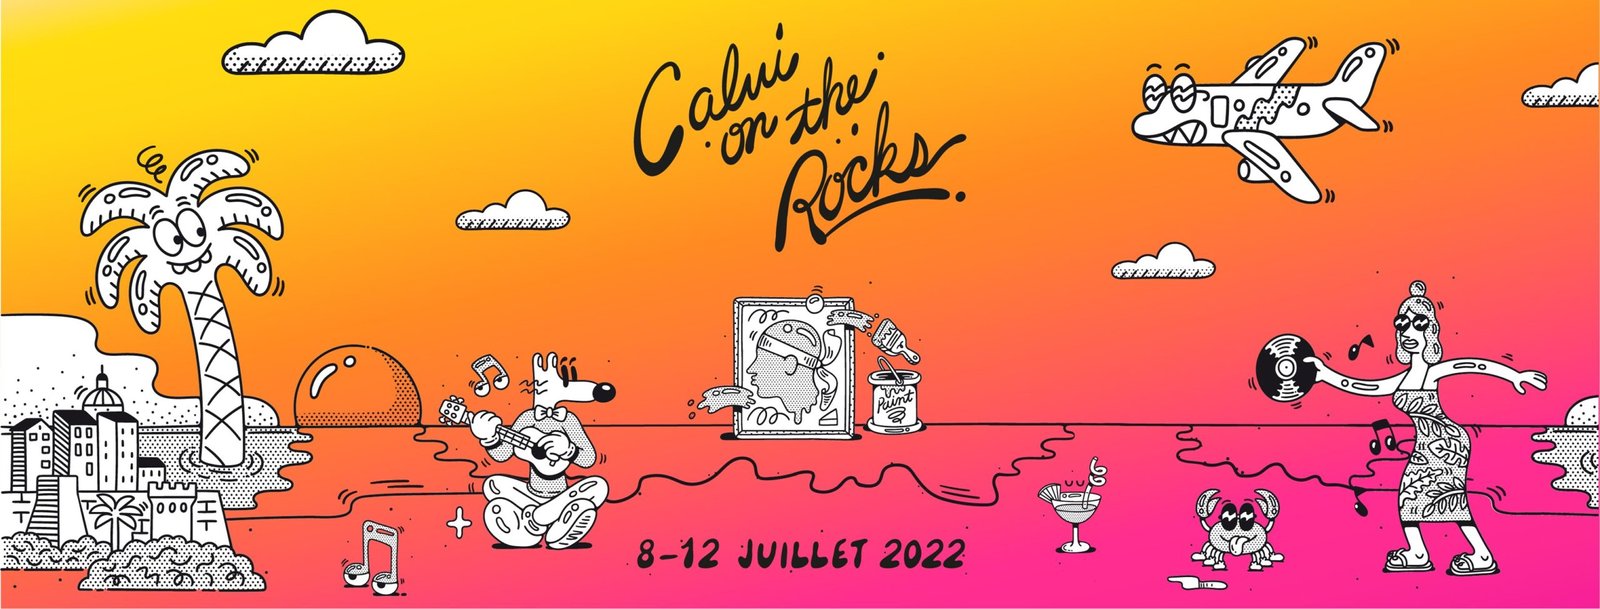 CALVI ON THE ROCKS 2022 : la programmation !